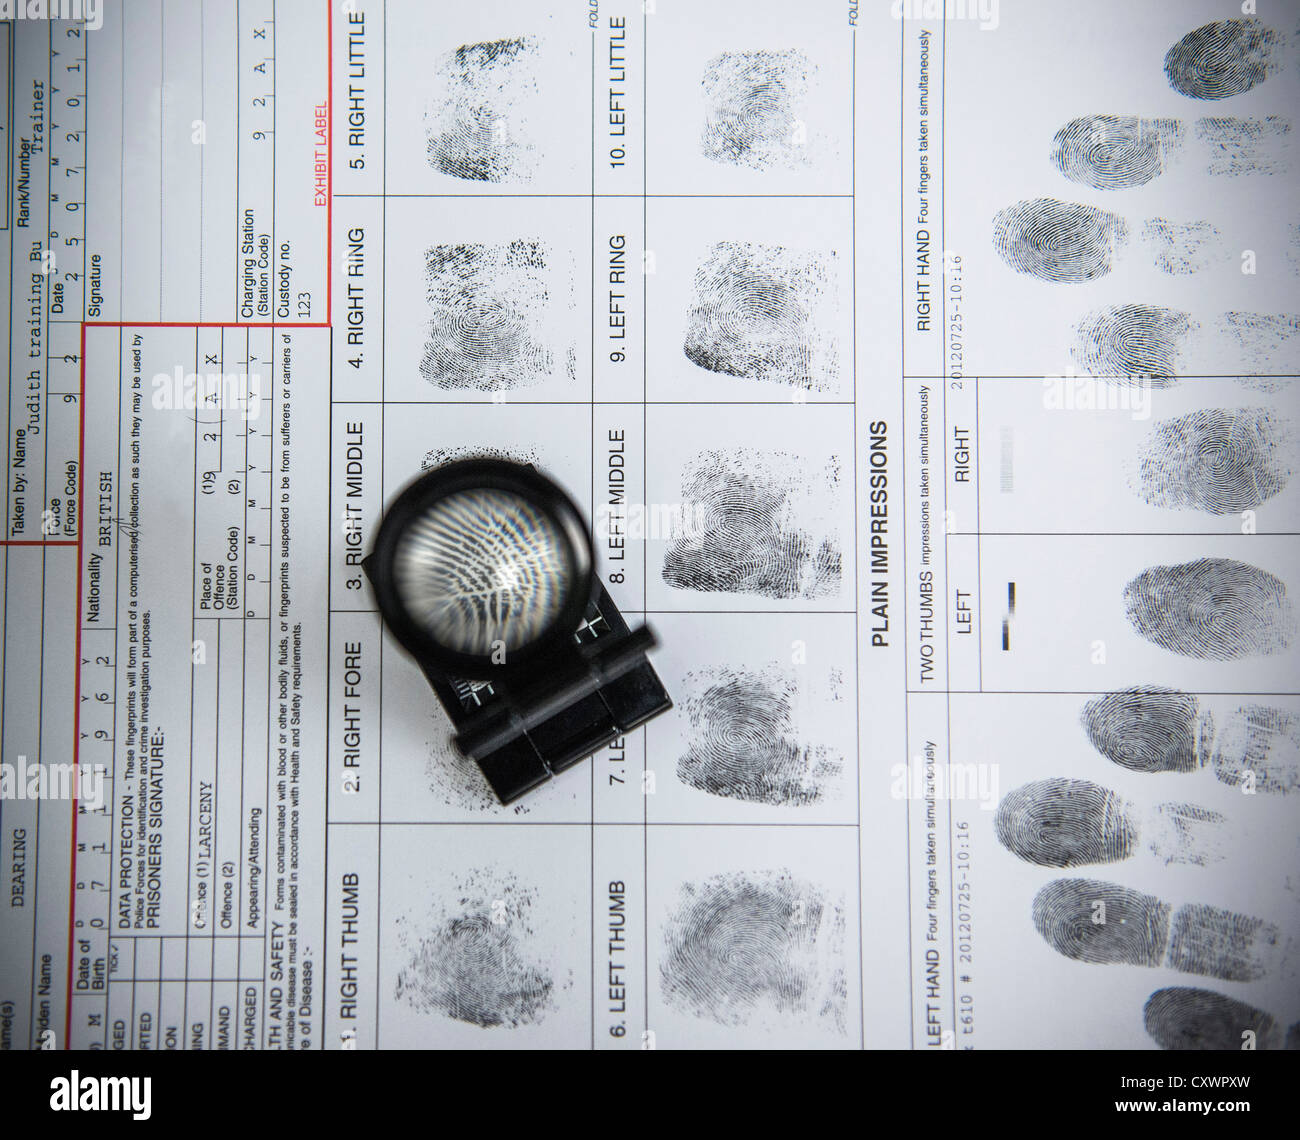 Loupe over fingerprints on arrest form Stock Photo